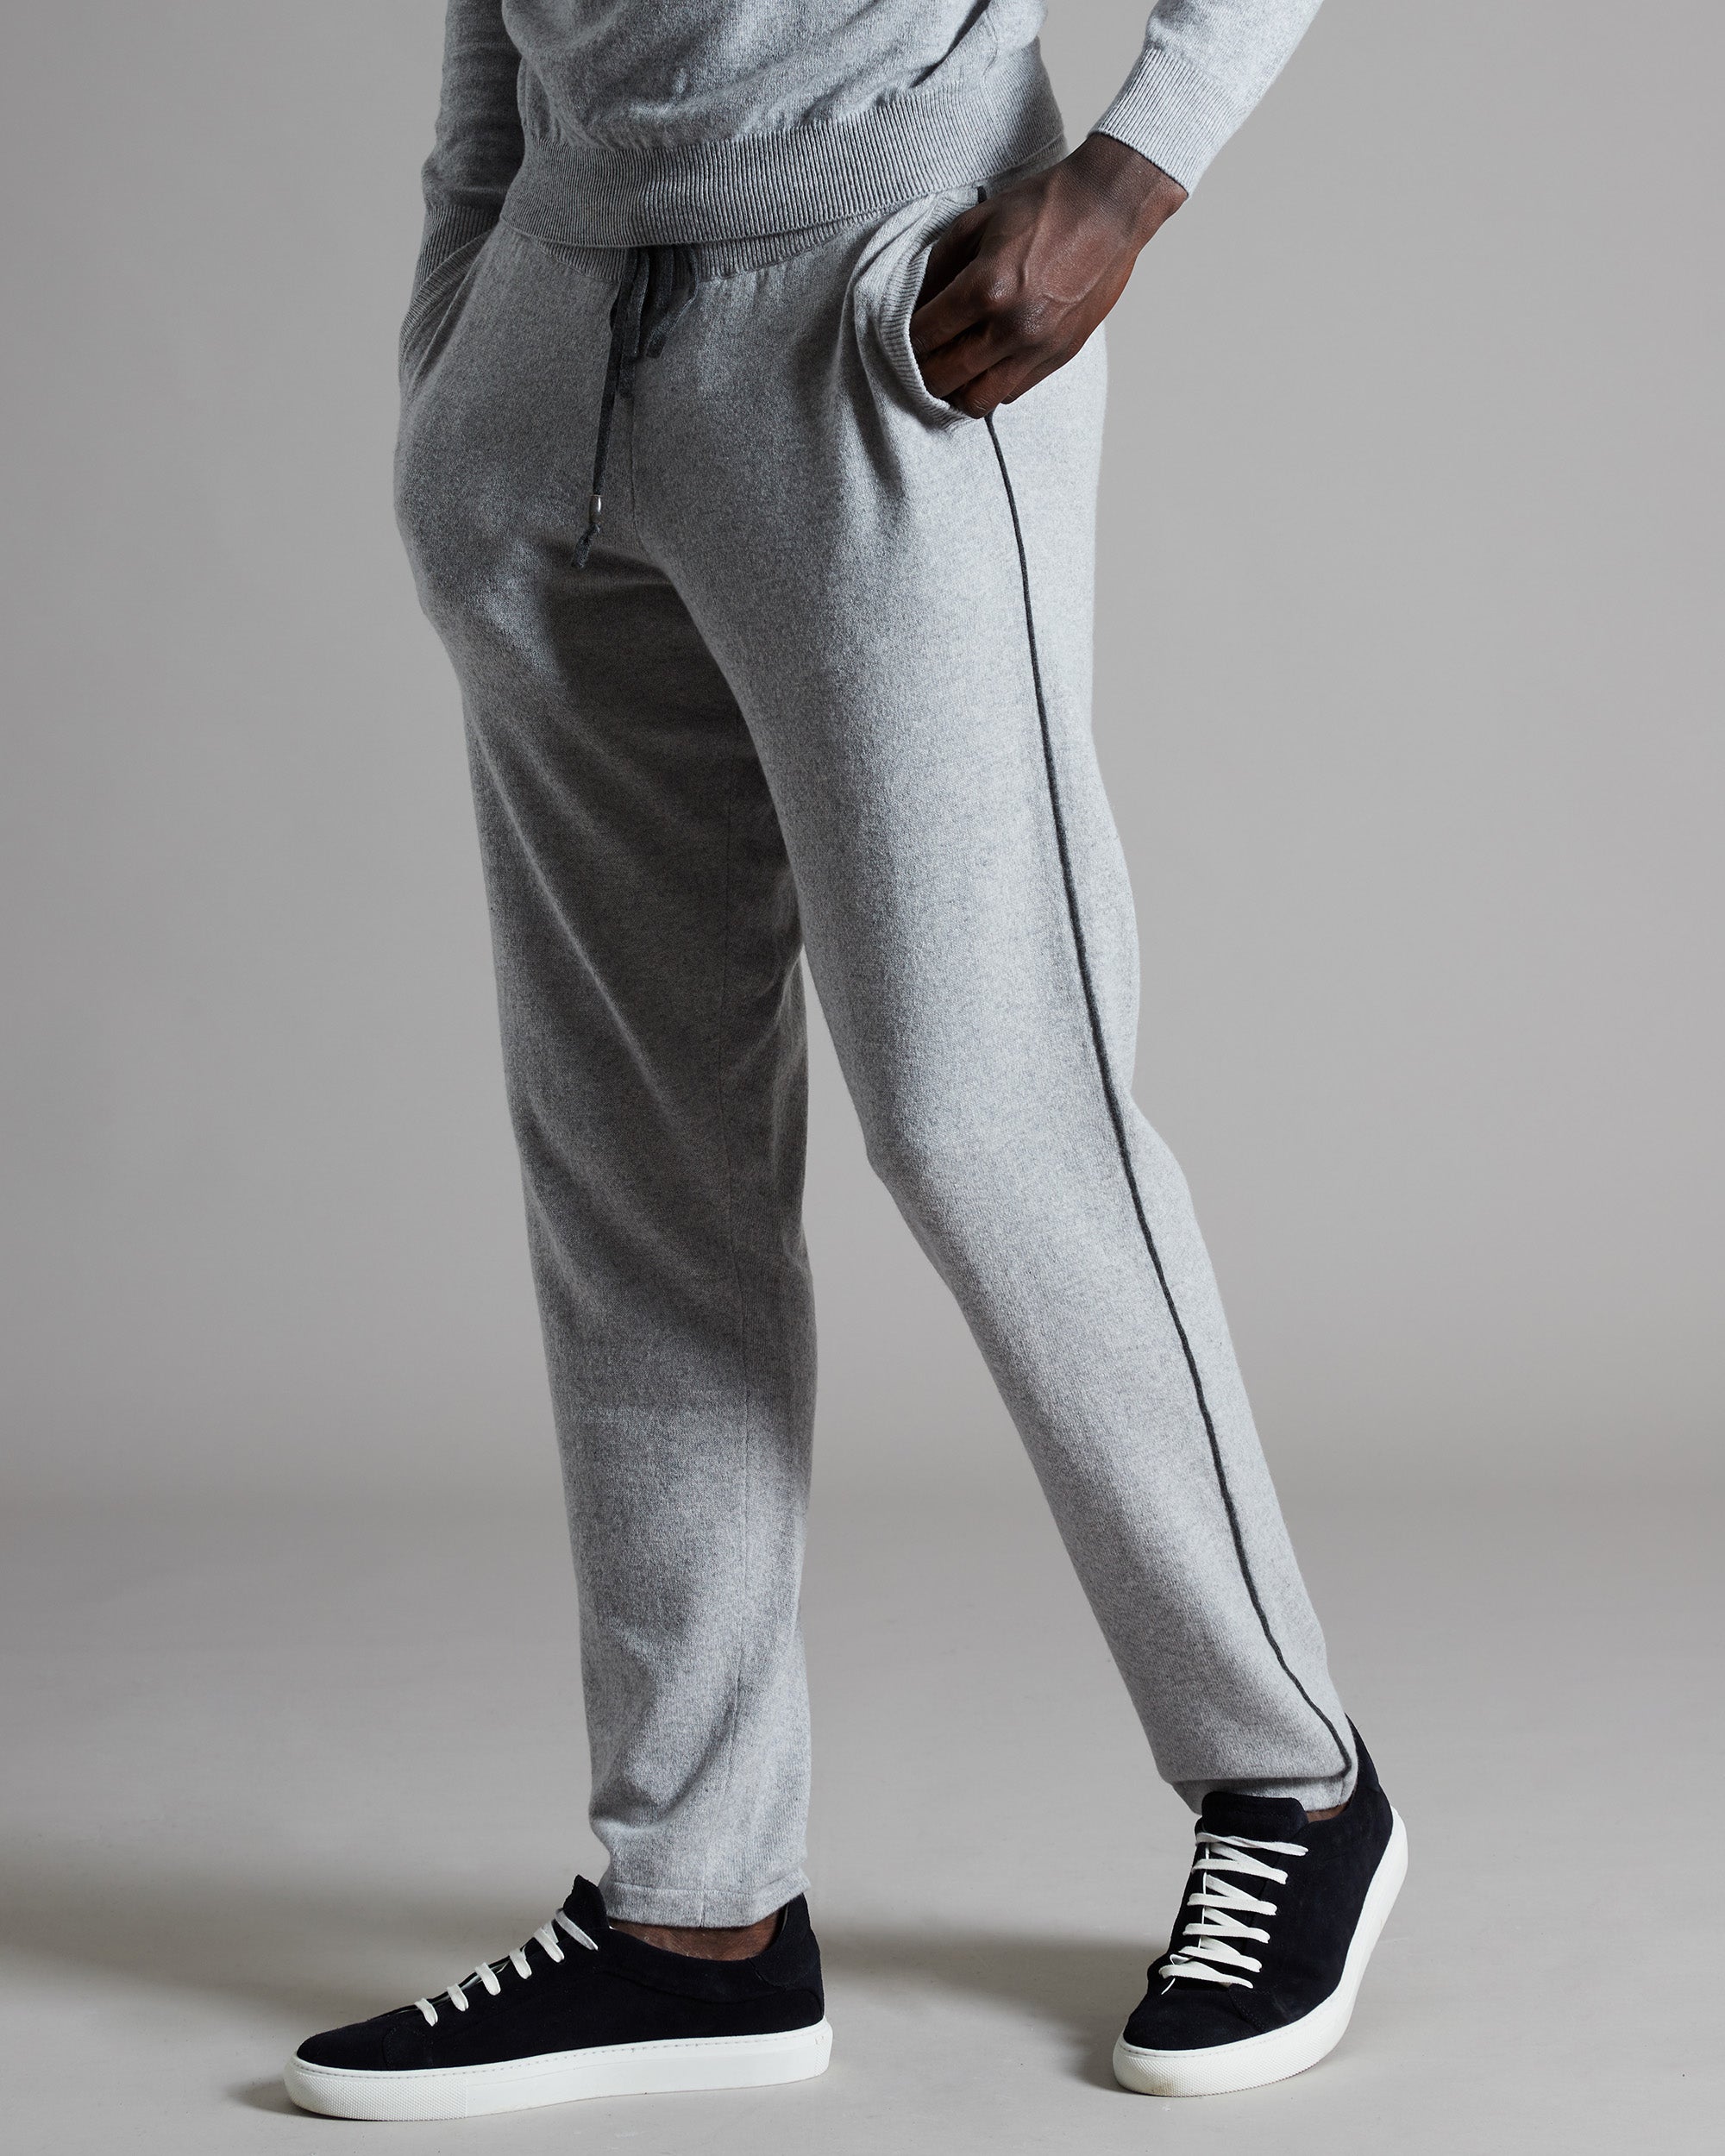 Grey kid cashmere jogging pants